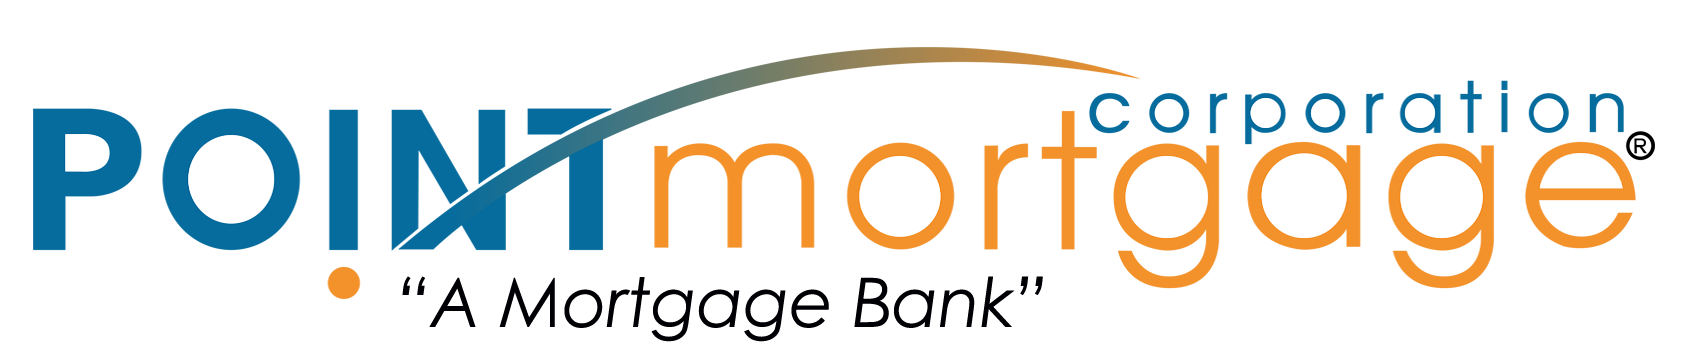 Point Mortgage Corporation logo